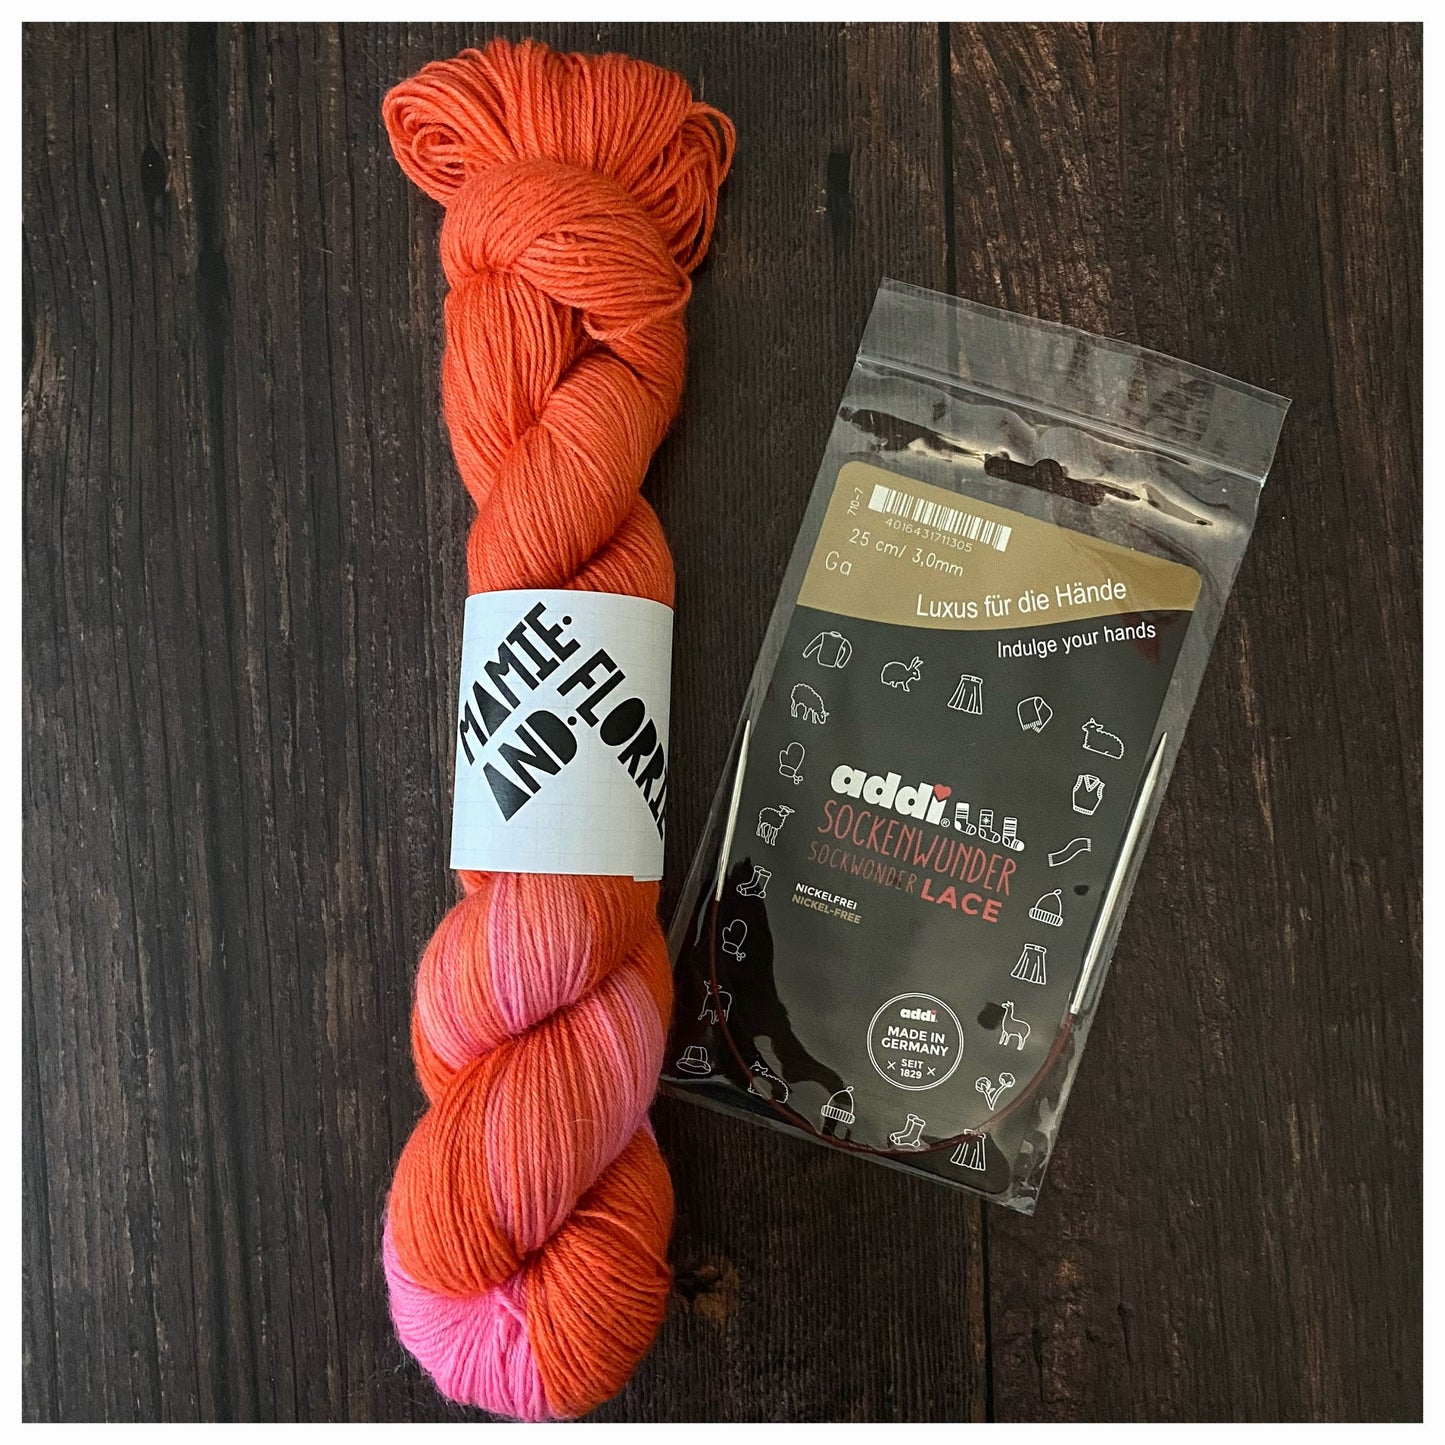 Addi Sockwunder Knitting Needle : 3.0mm